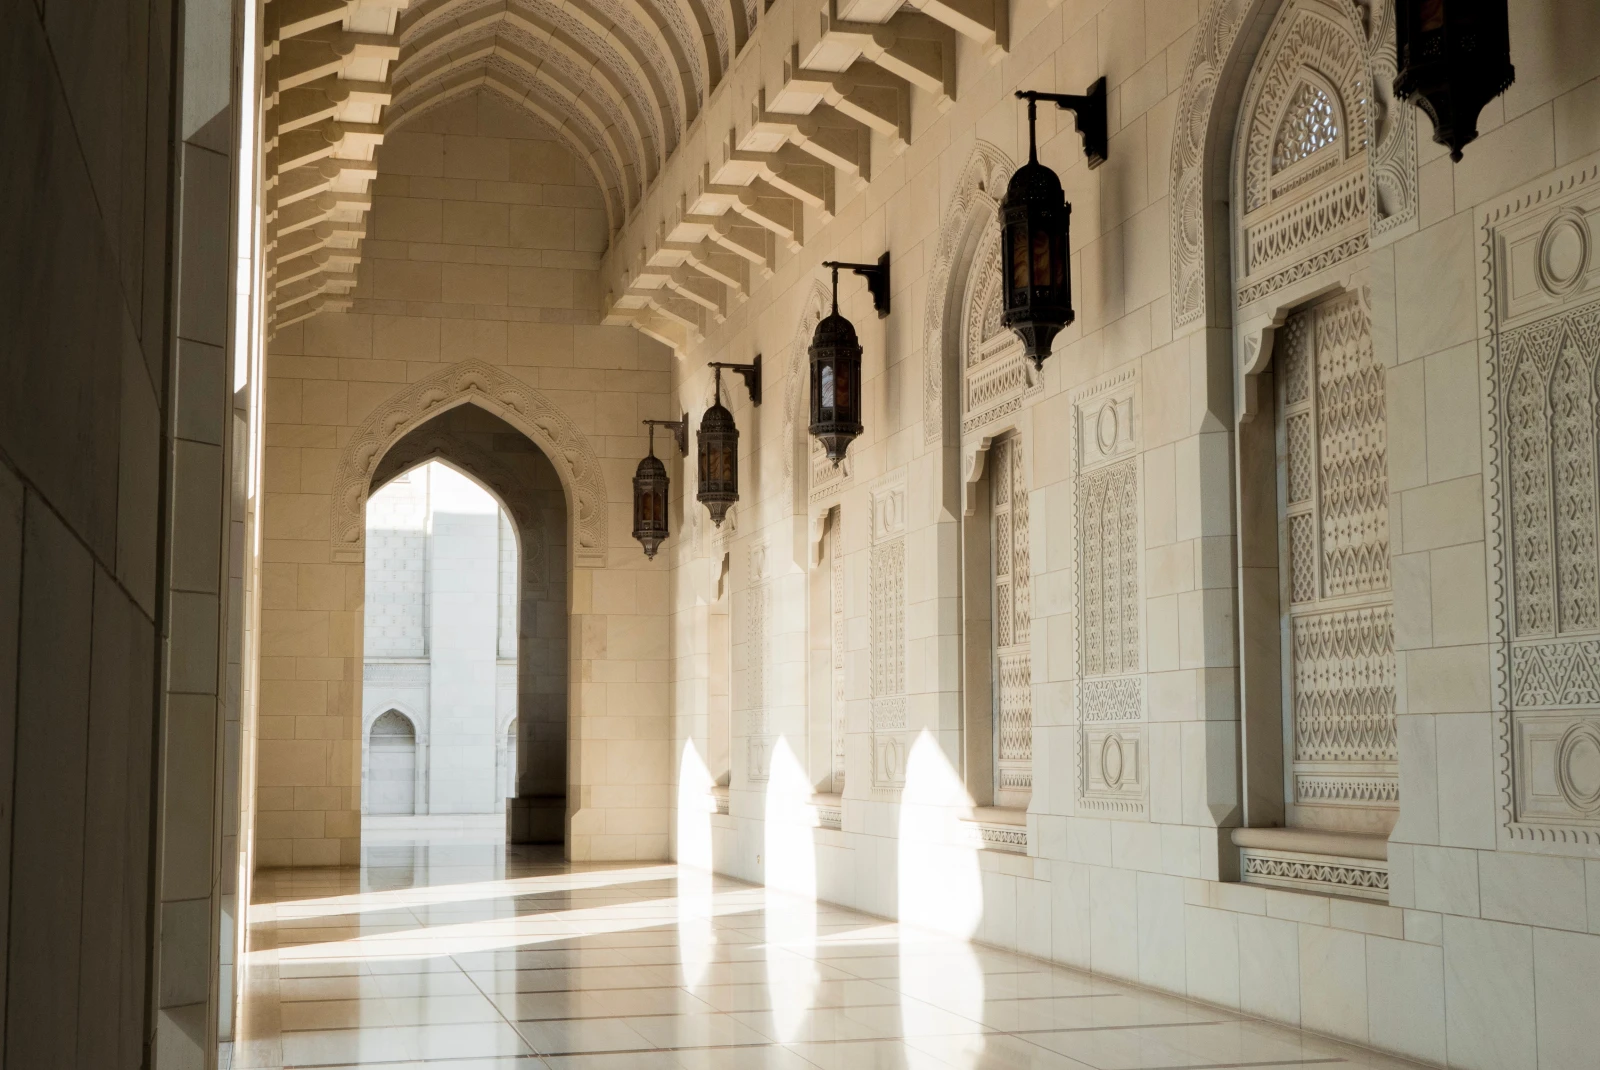 Inside the Sultan Qaboos Grand Mosque in Oman